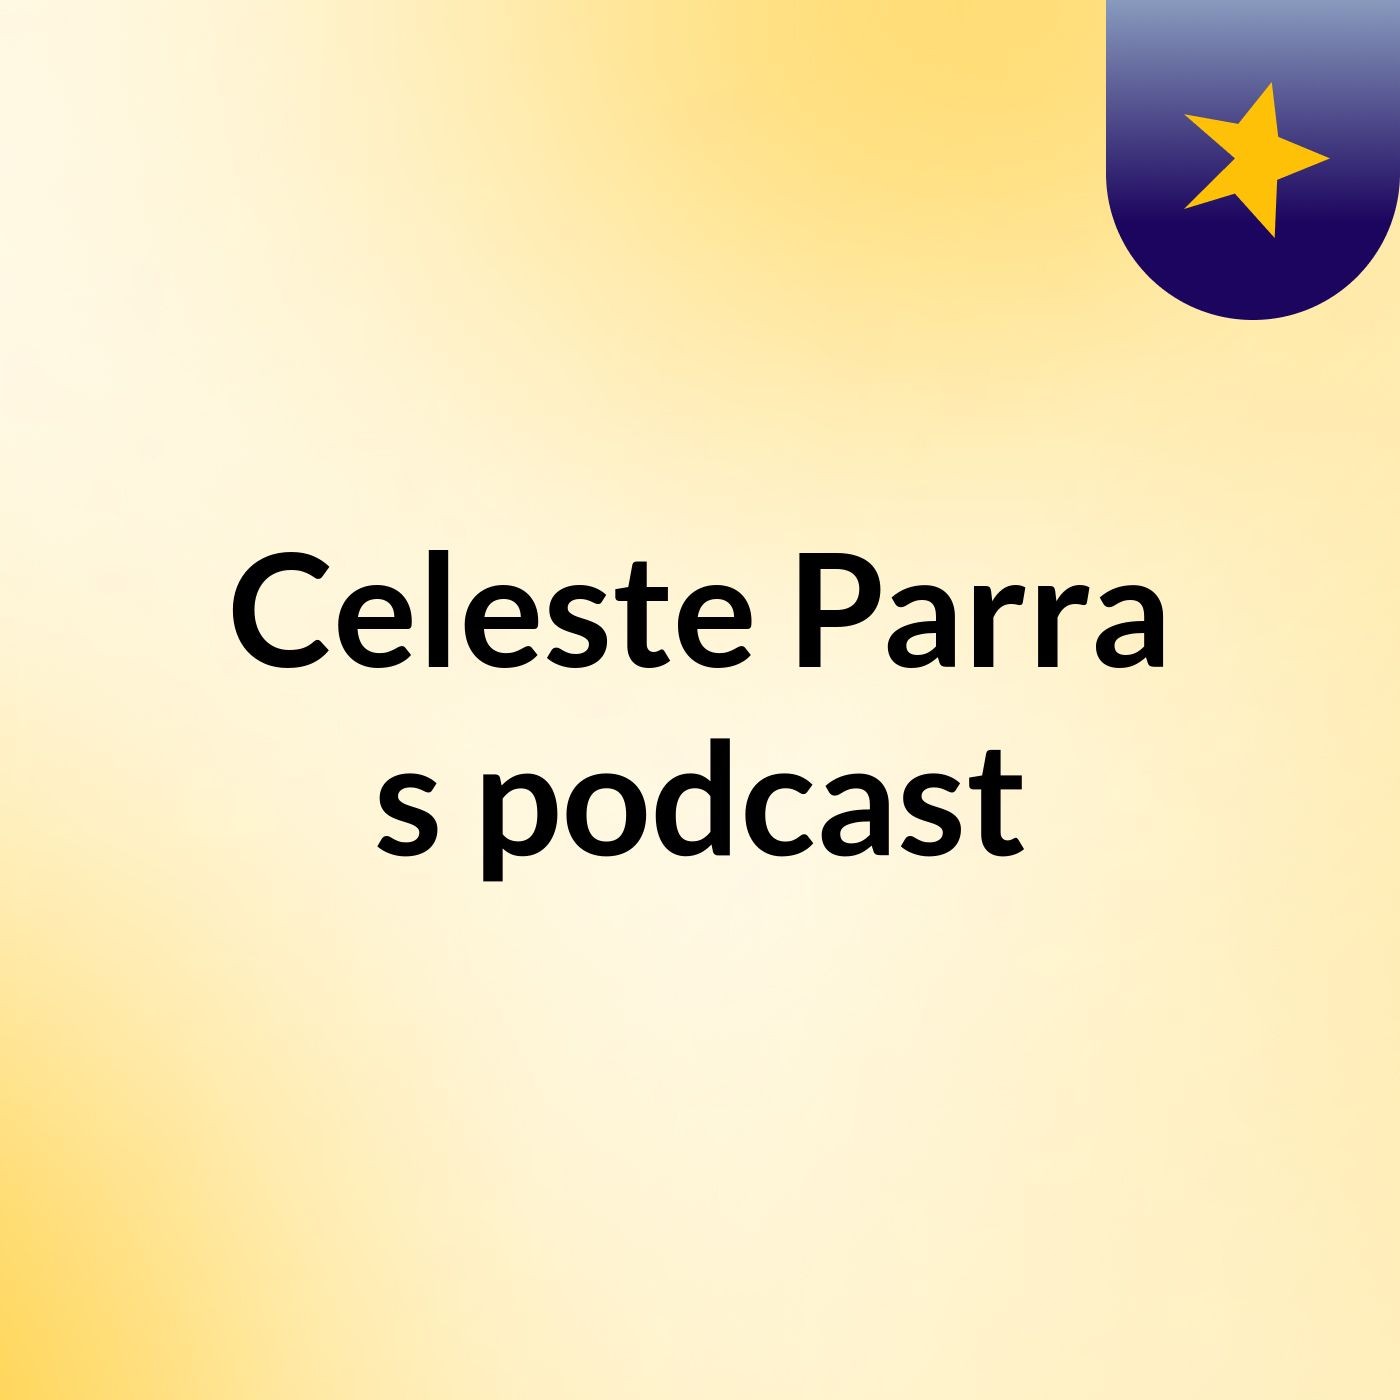 Celeste Parra's podcast